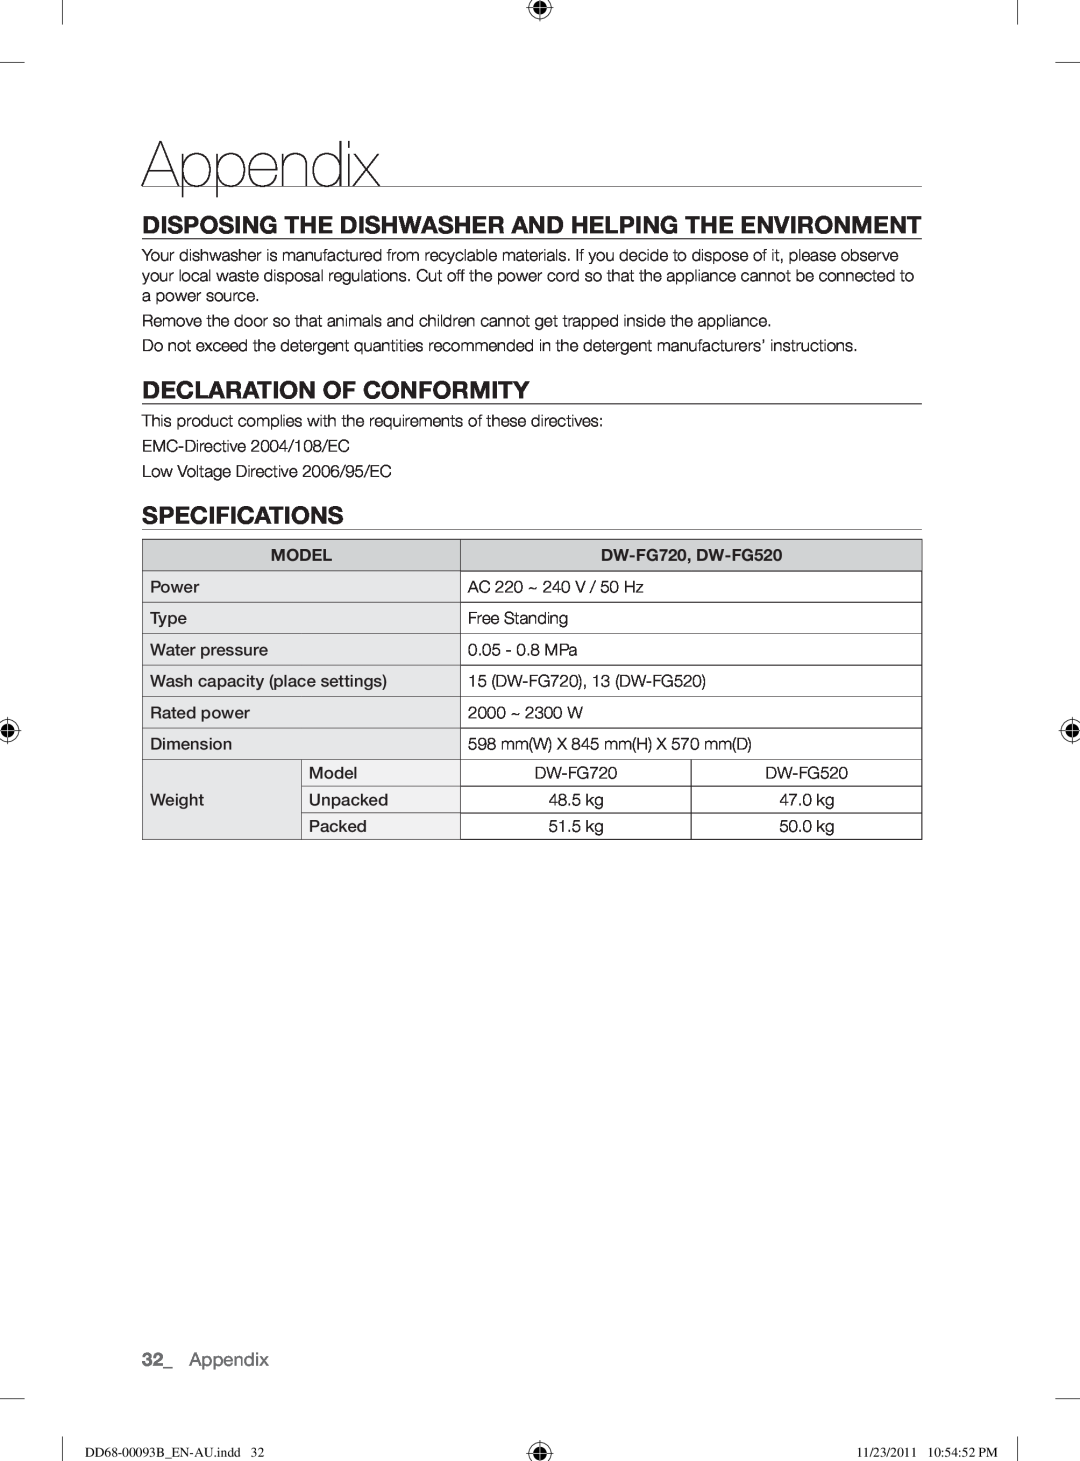 Samsung user manual Appendix, Declaration Of Conformity, Specifications, Model, DW-FG720, DW-FG520 